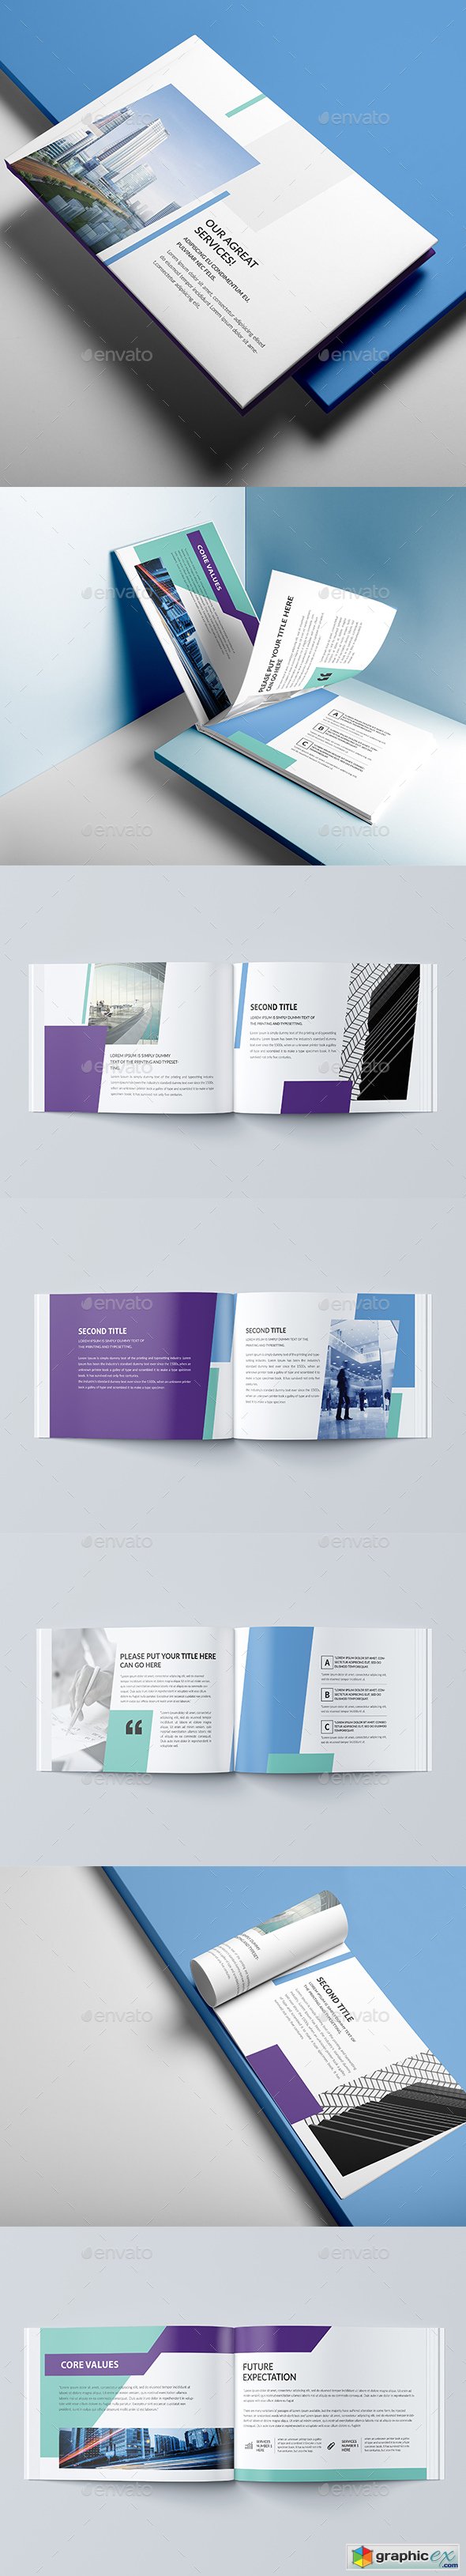 Minimal Architecture Brochure